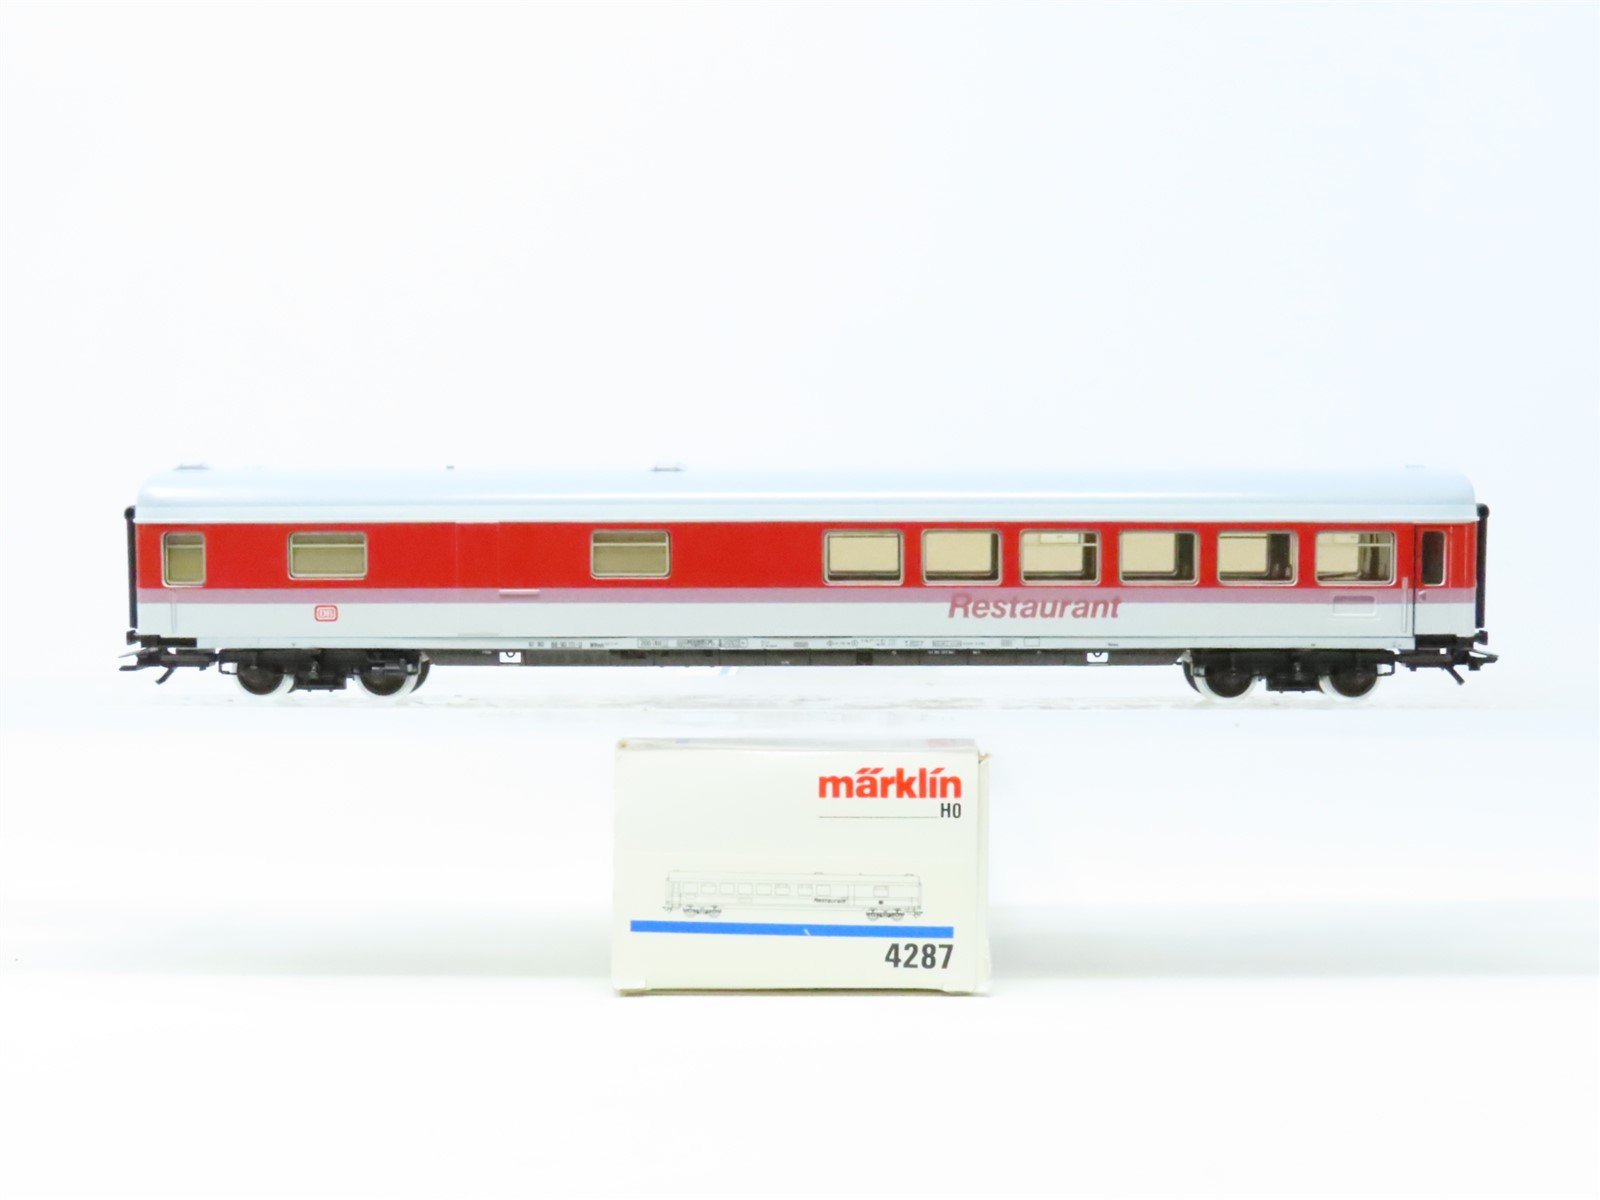 HO Scale Marklin #4287 DB Deutsche Bahn Dining Passenger Car #618088901110